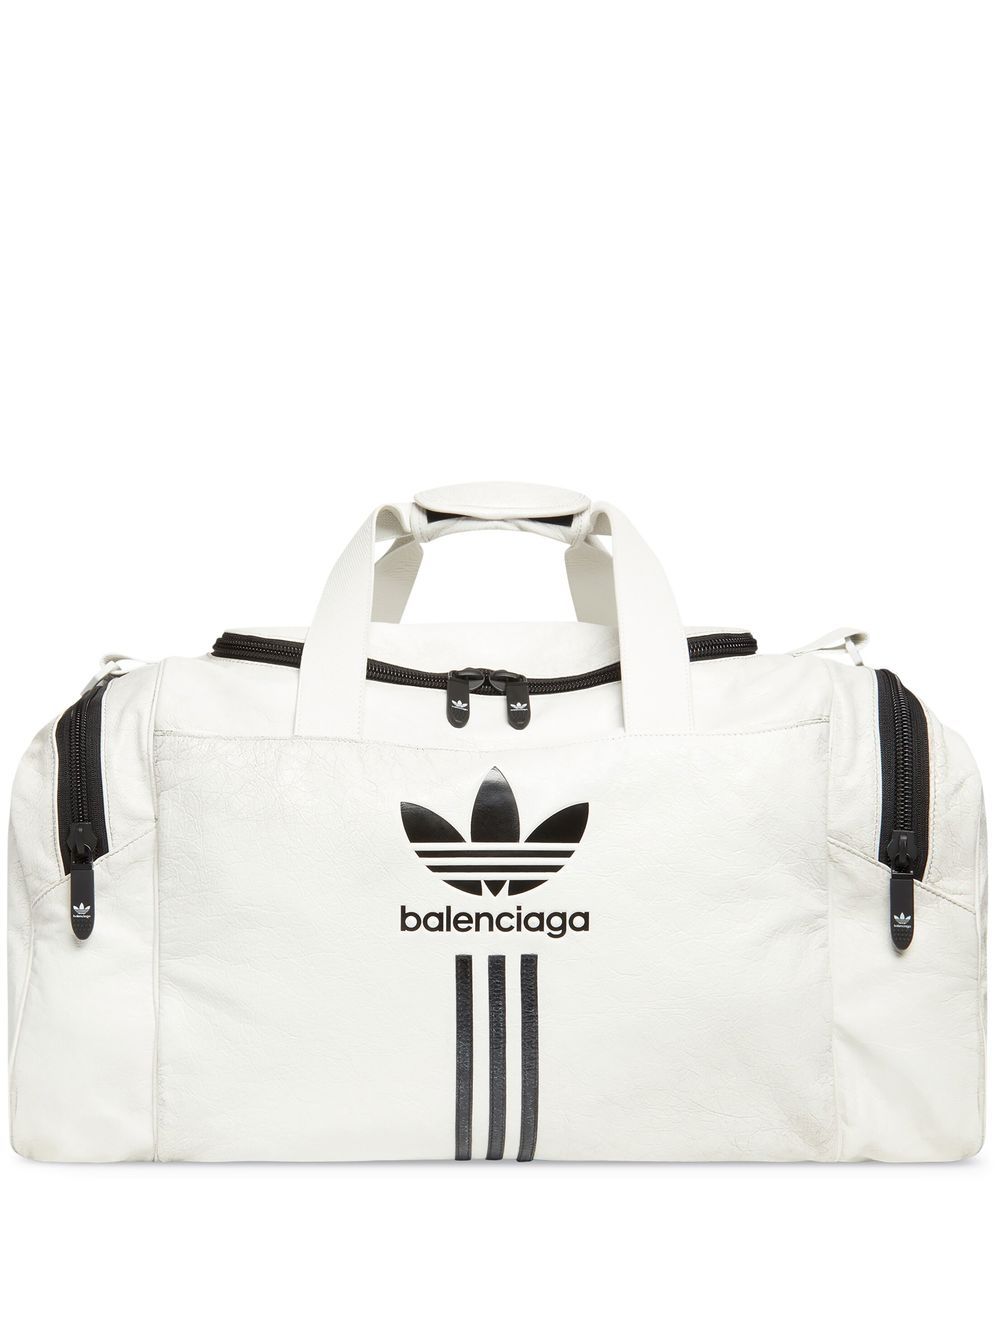 Balenciaga x Adidas trefoil logo-print gym bag - White